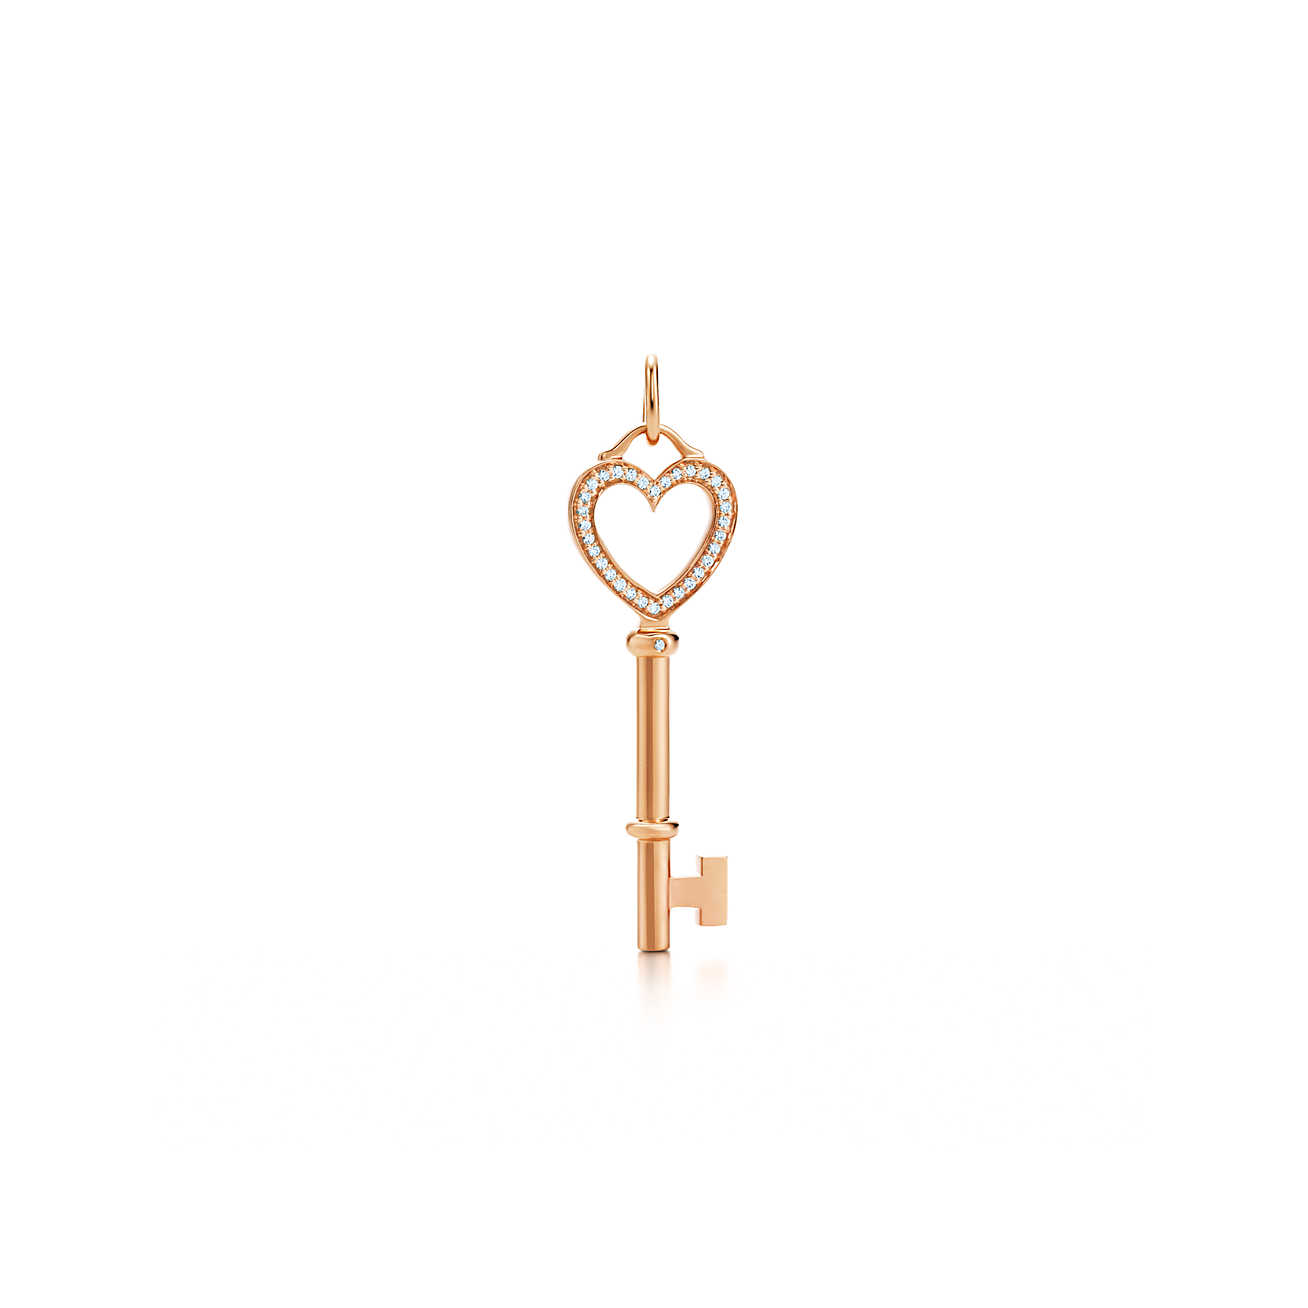 Tiffany Keys 系列中号 18K 玫瑰金镶钻心形钥匙吊饰